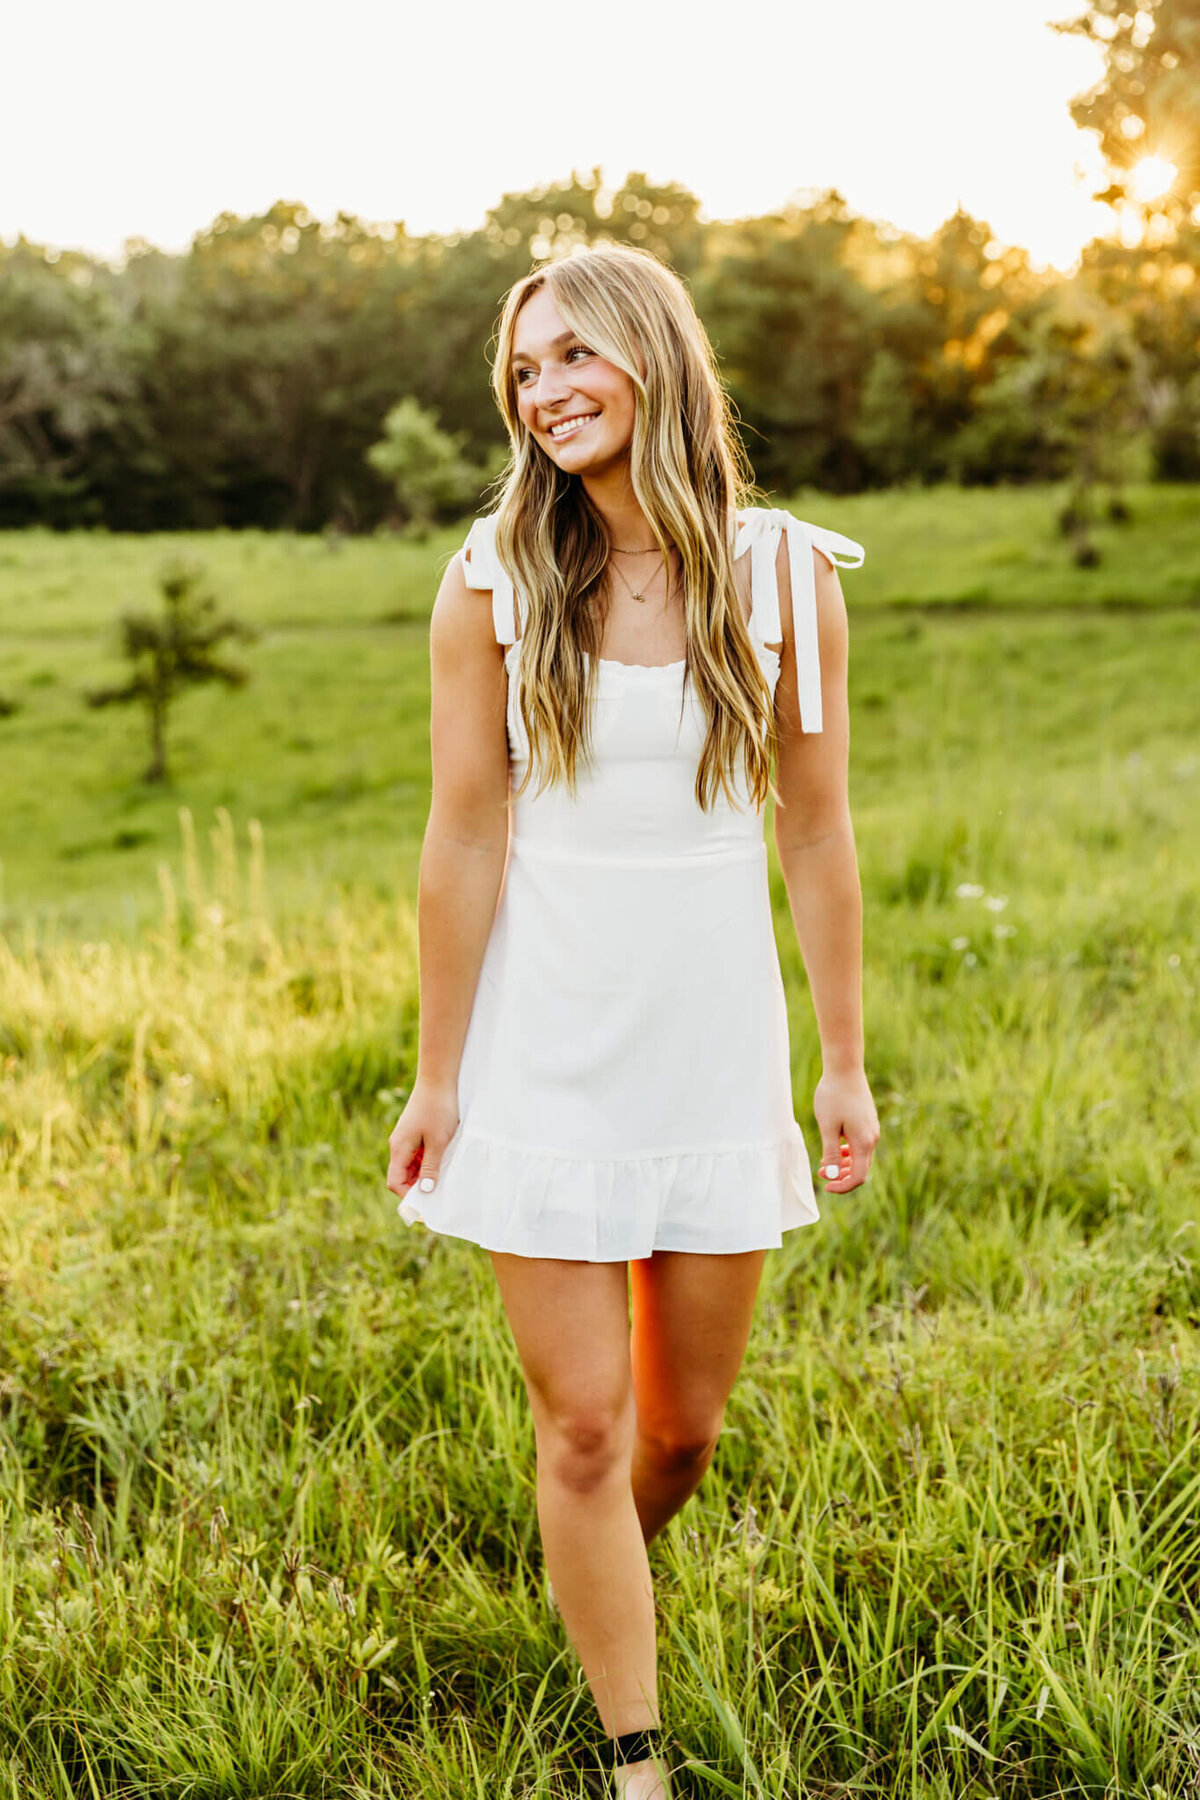 Oshkosh high schooler smiling as she walks in a field for her senior photos